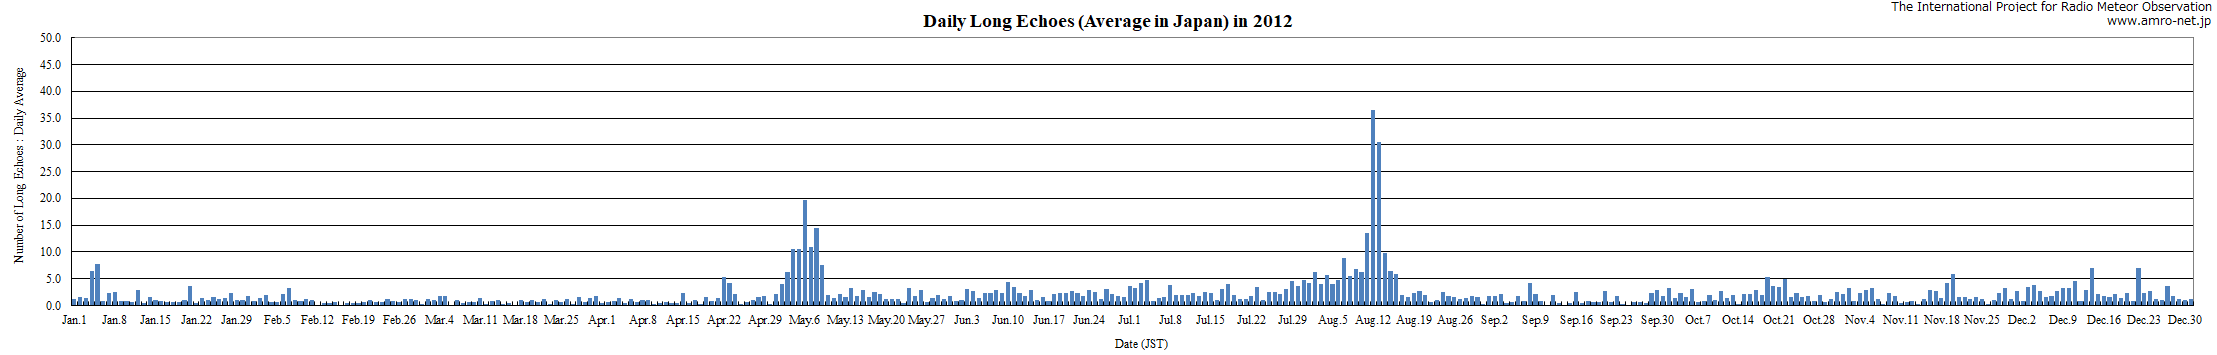 Long Echo Graph in 2012